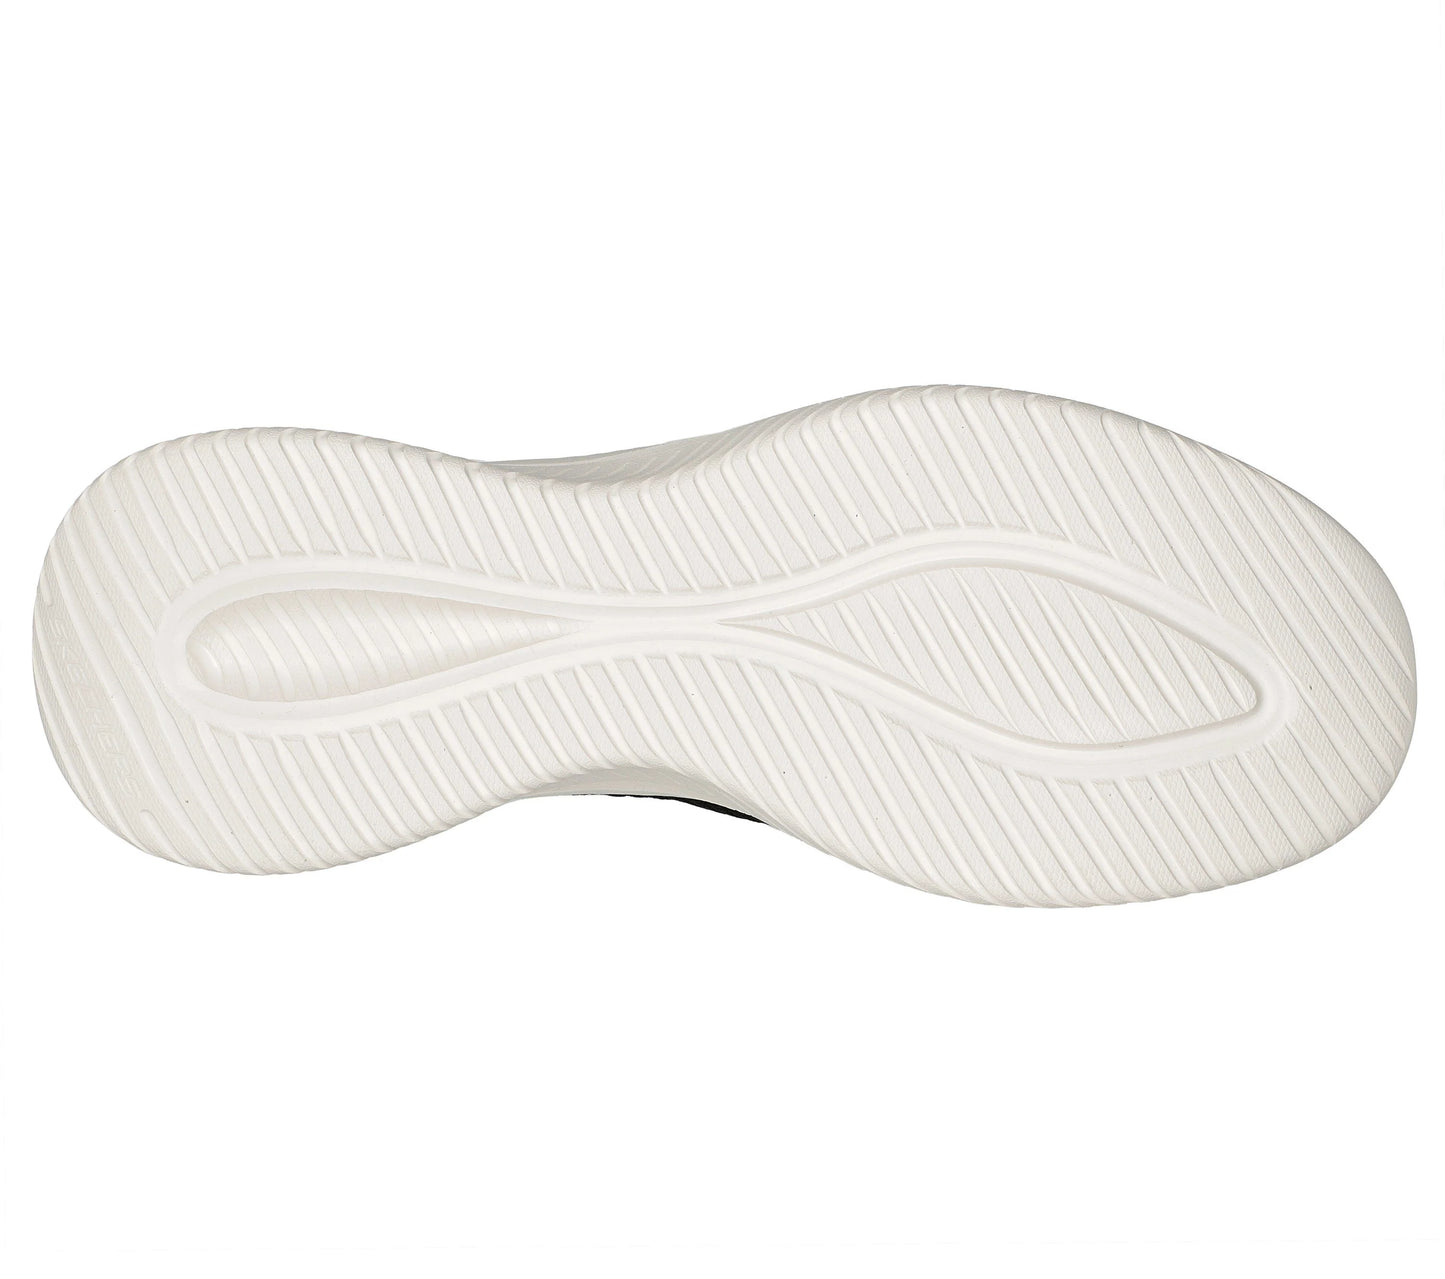 Men's Slip-Ins: Ultra Flex 3.0 - Smooth Step Black/White